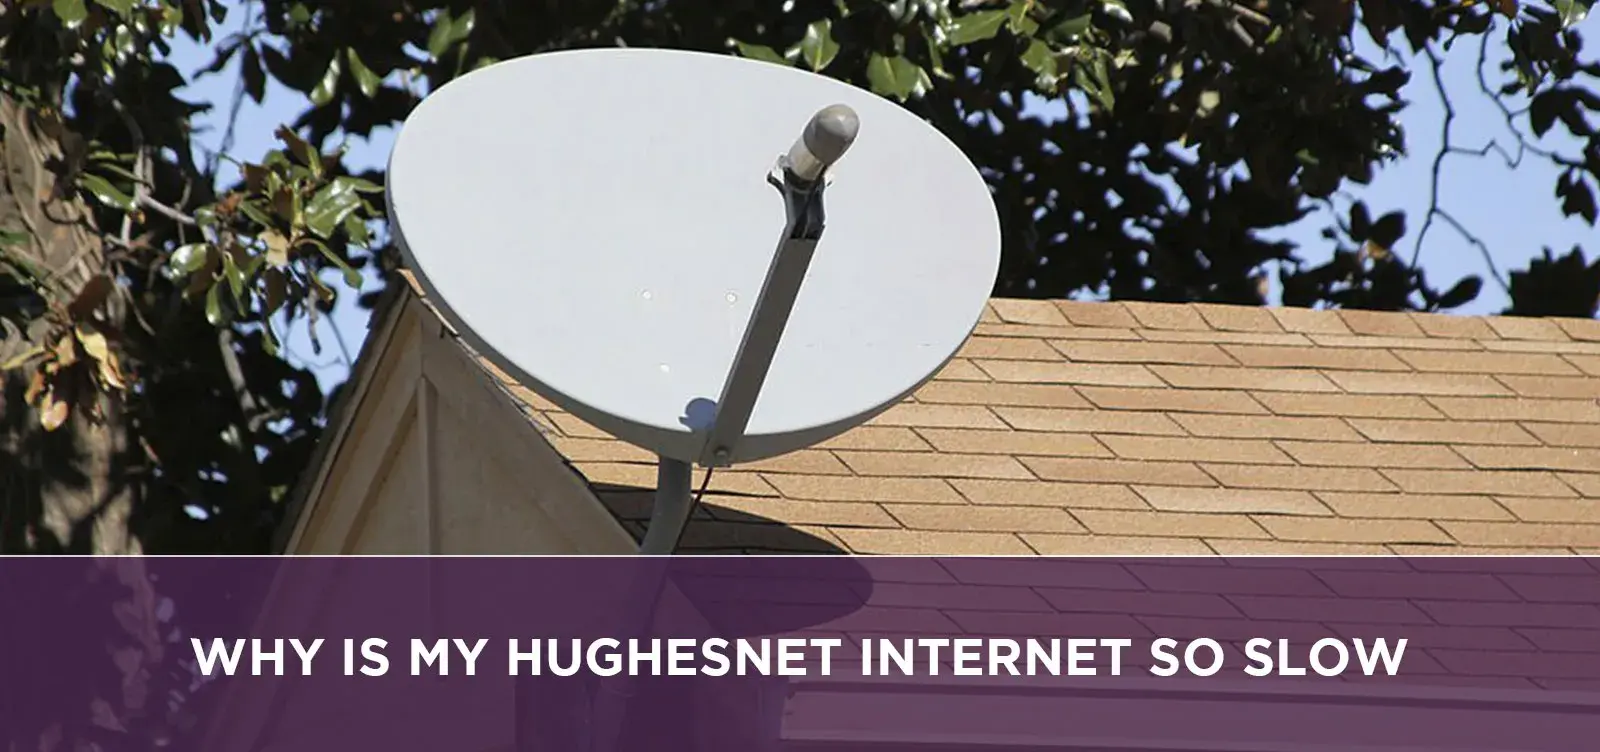 Why Is My Hughesnet Internet So Slow?